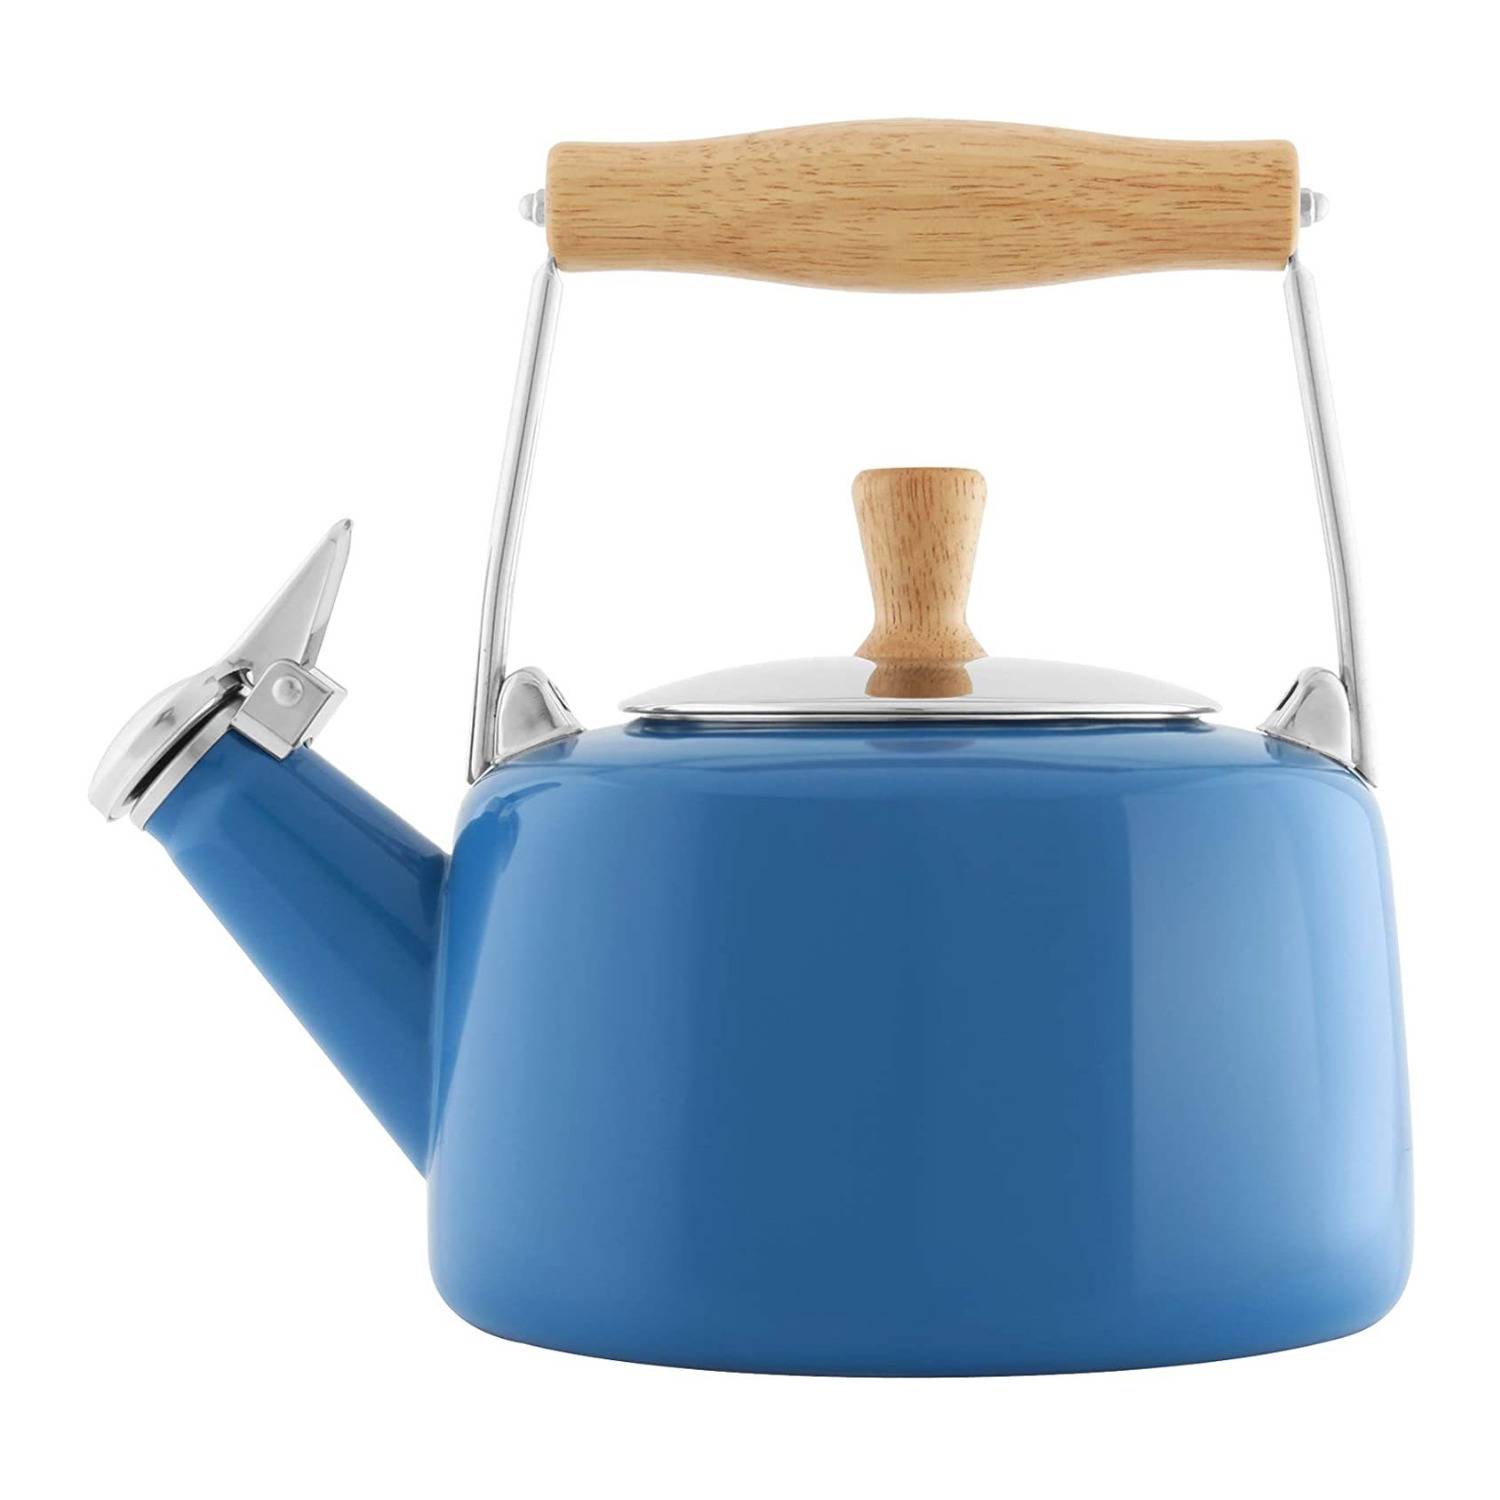 Chantal 1.4-Quart Enamel-on-Steel Sven Tea kettle (Blue Cove)